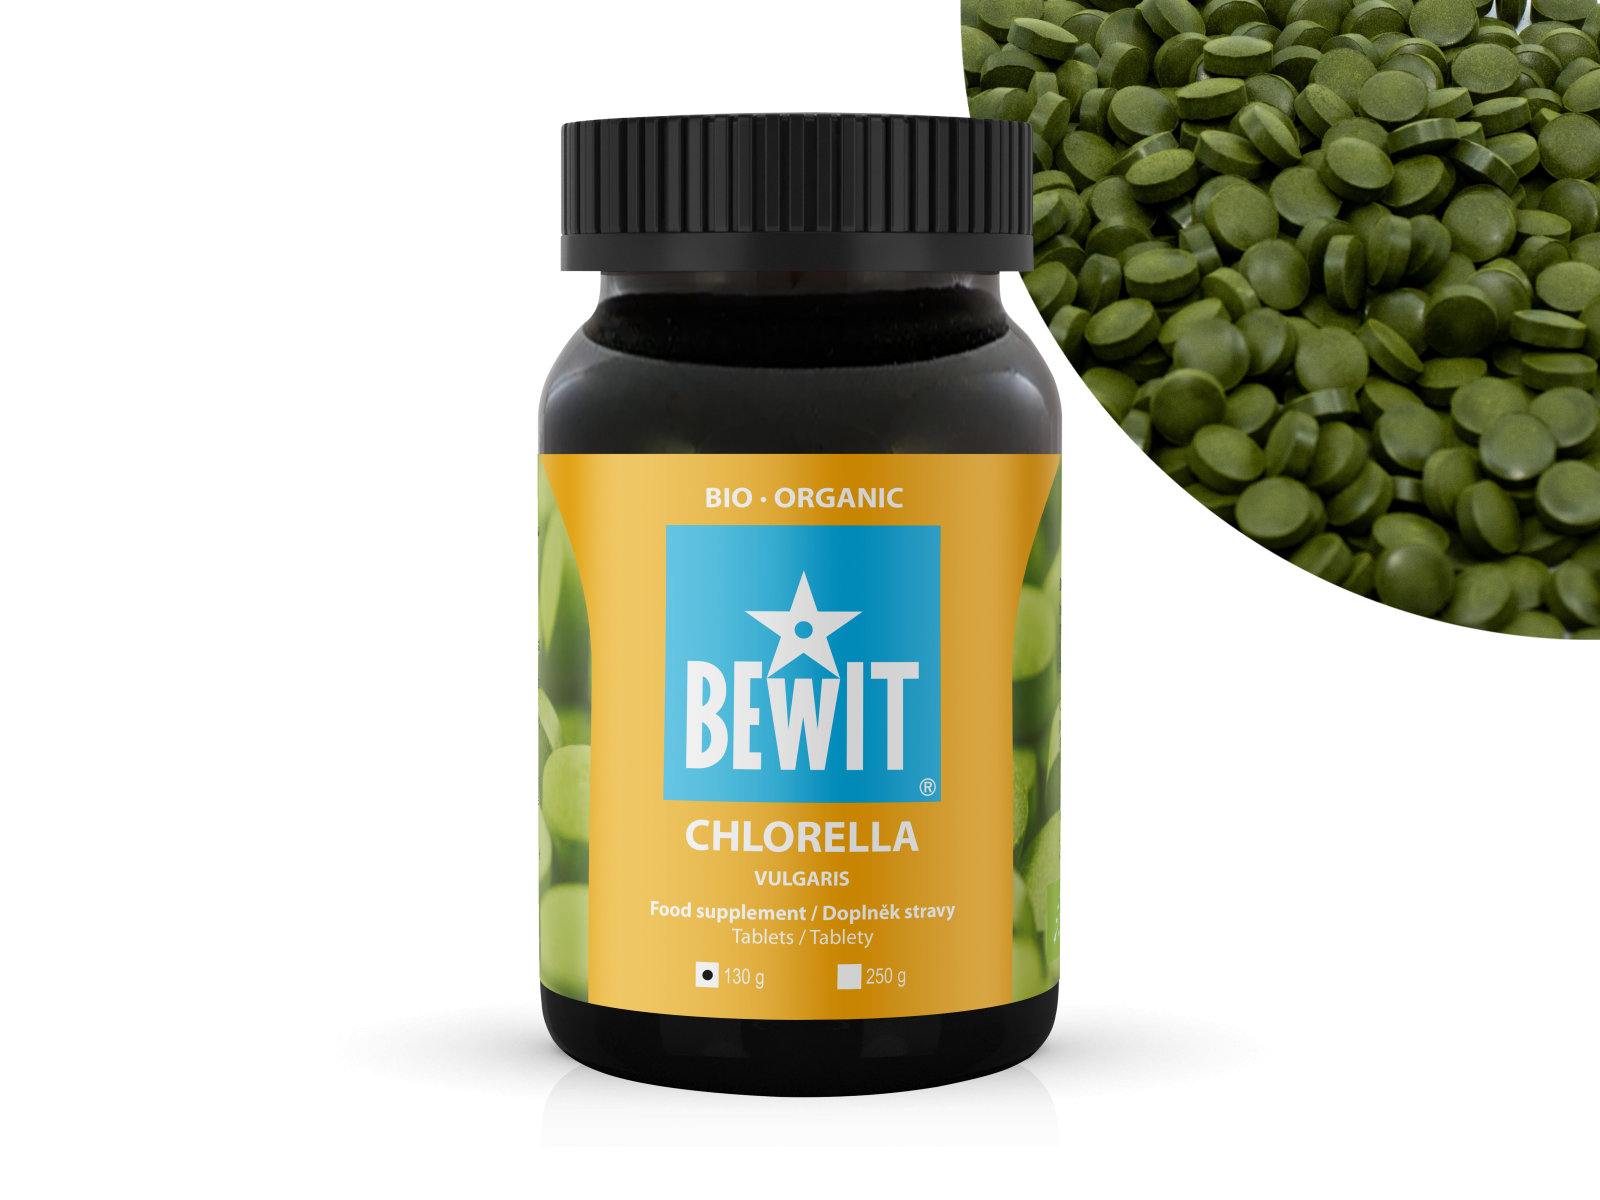 BEWIT Chlorella vulgaris ORGANIC, tablets - Food supplement